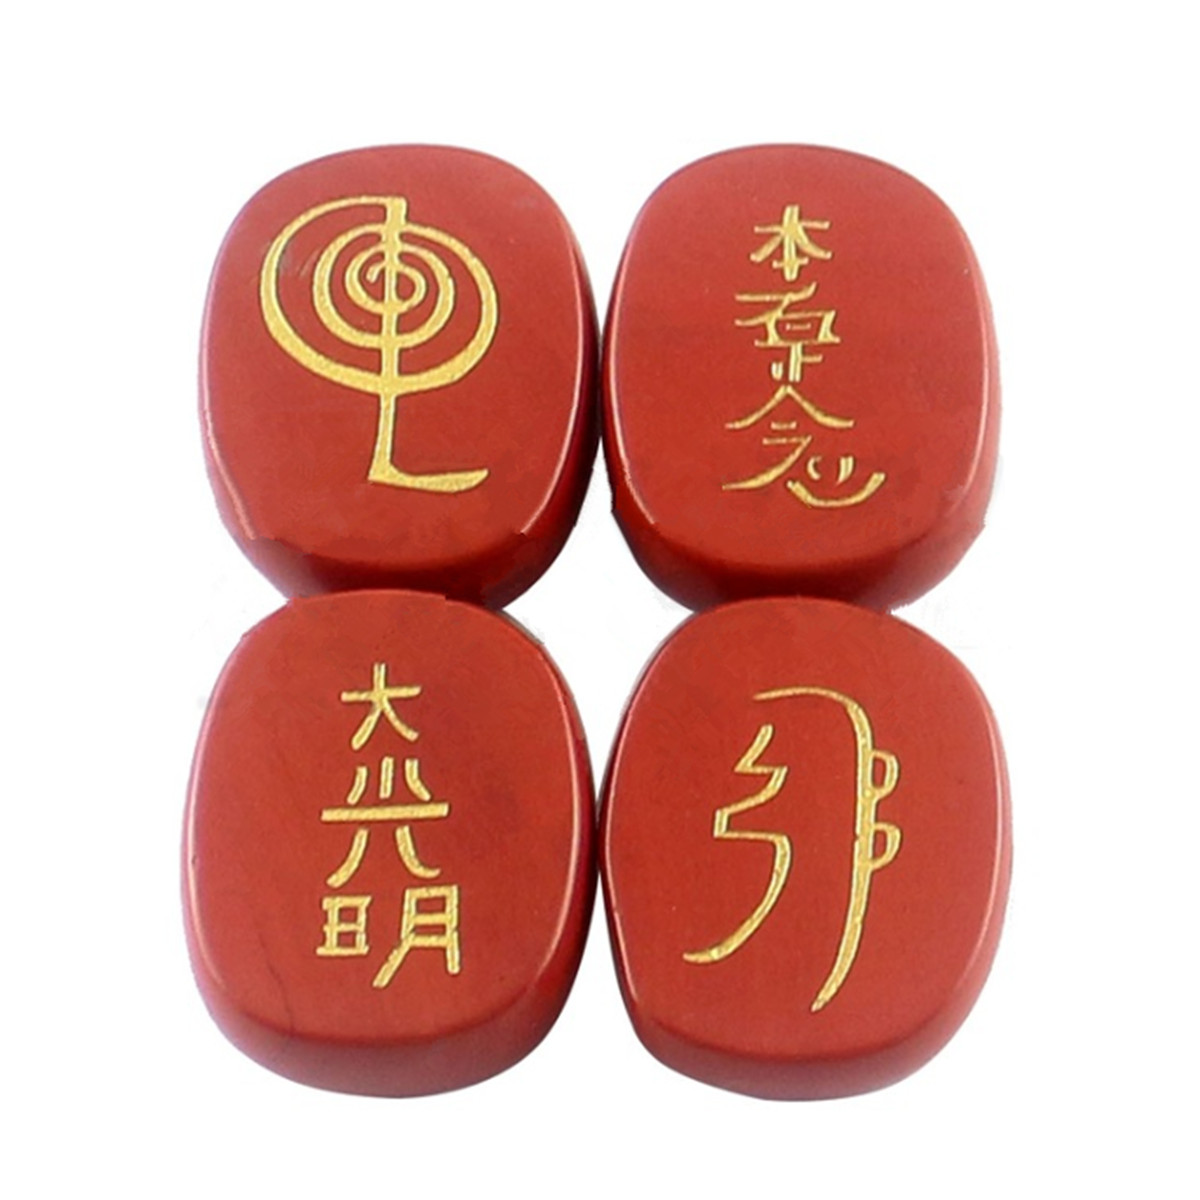 4X Engraved Usui Reiki Symbol Healing Energy Sanskrit Palm Crystal Natural Stone 